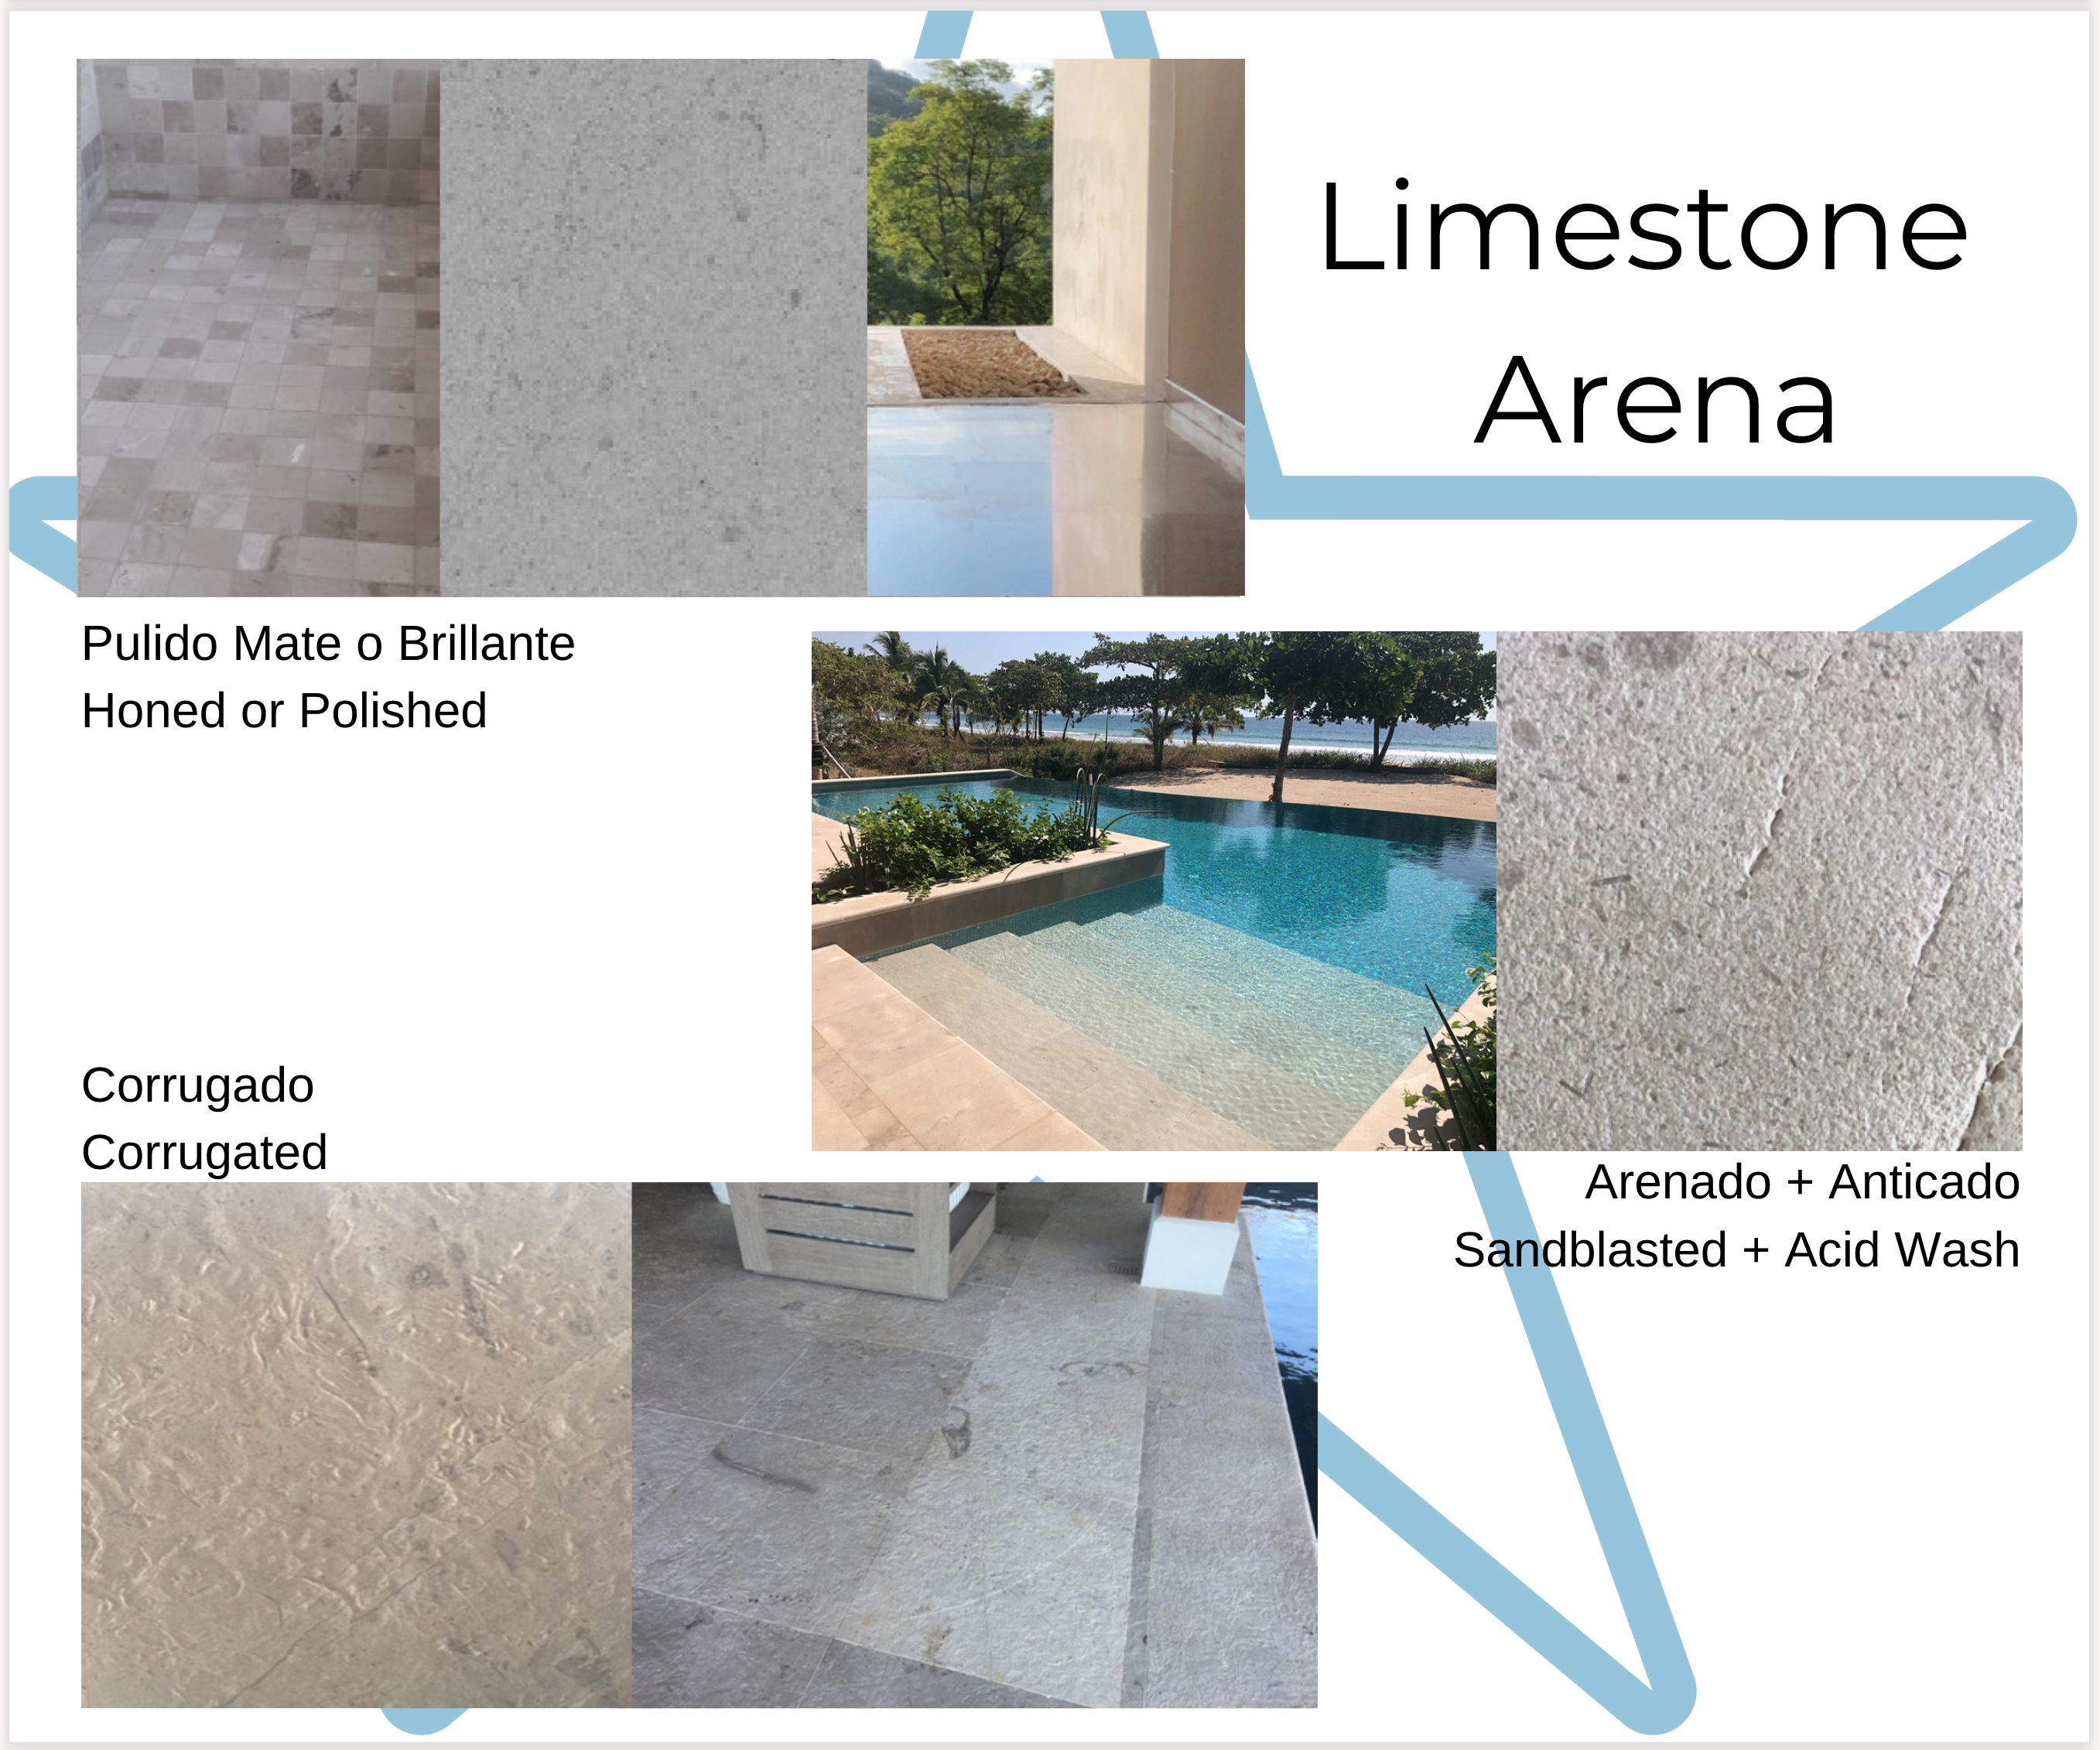 Limestone Arena Ficha Técnica Proyectos